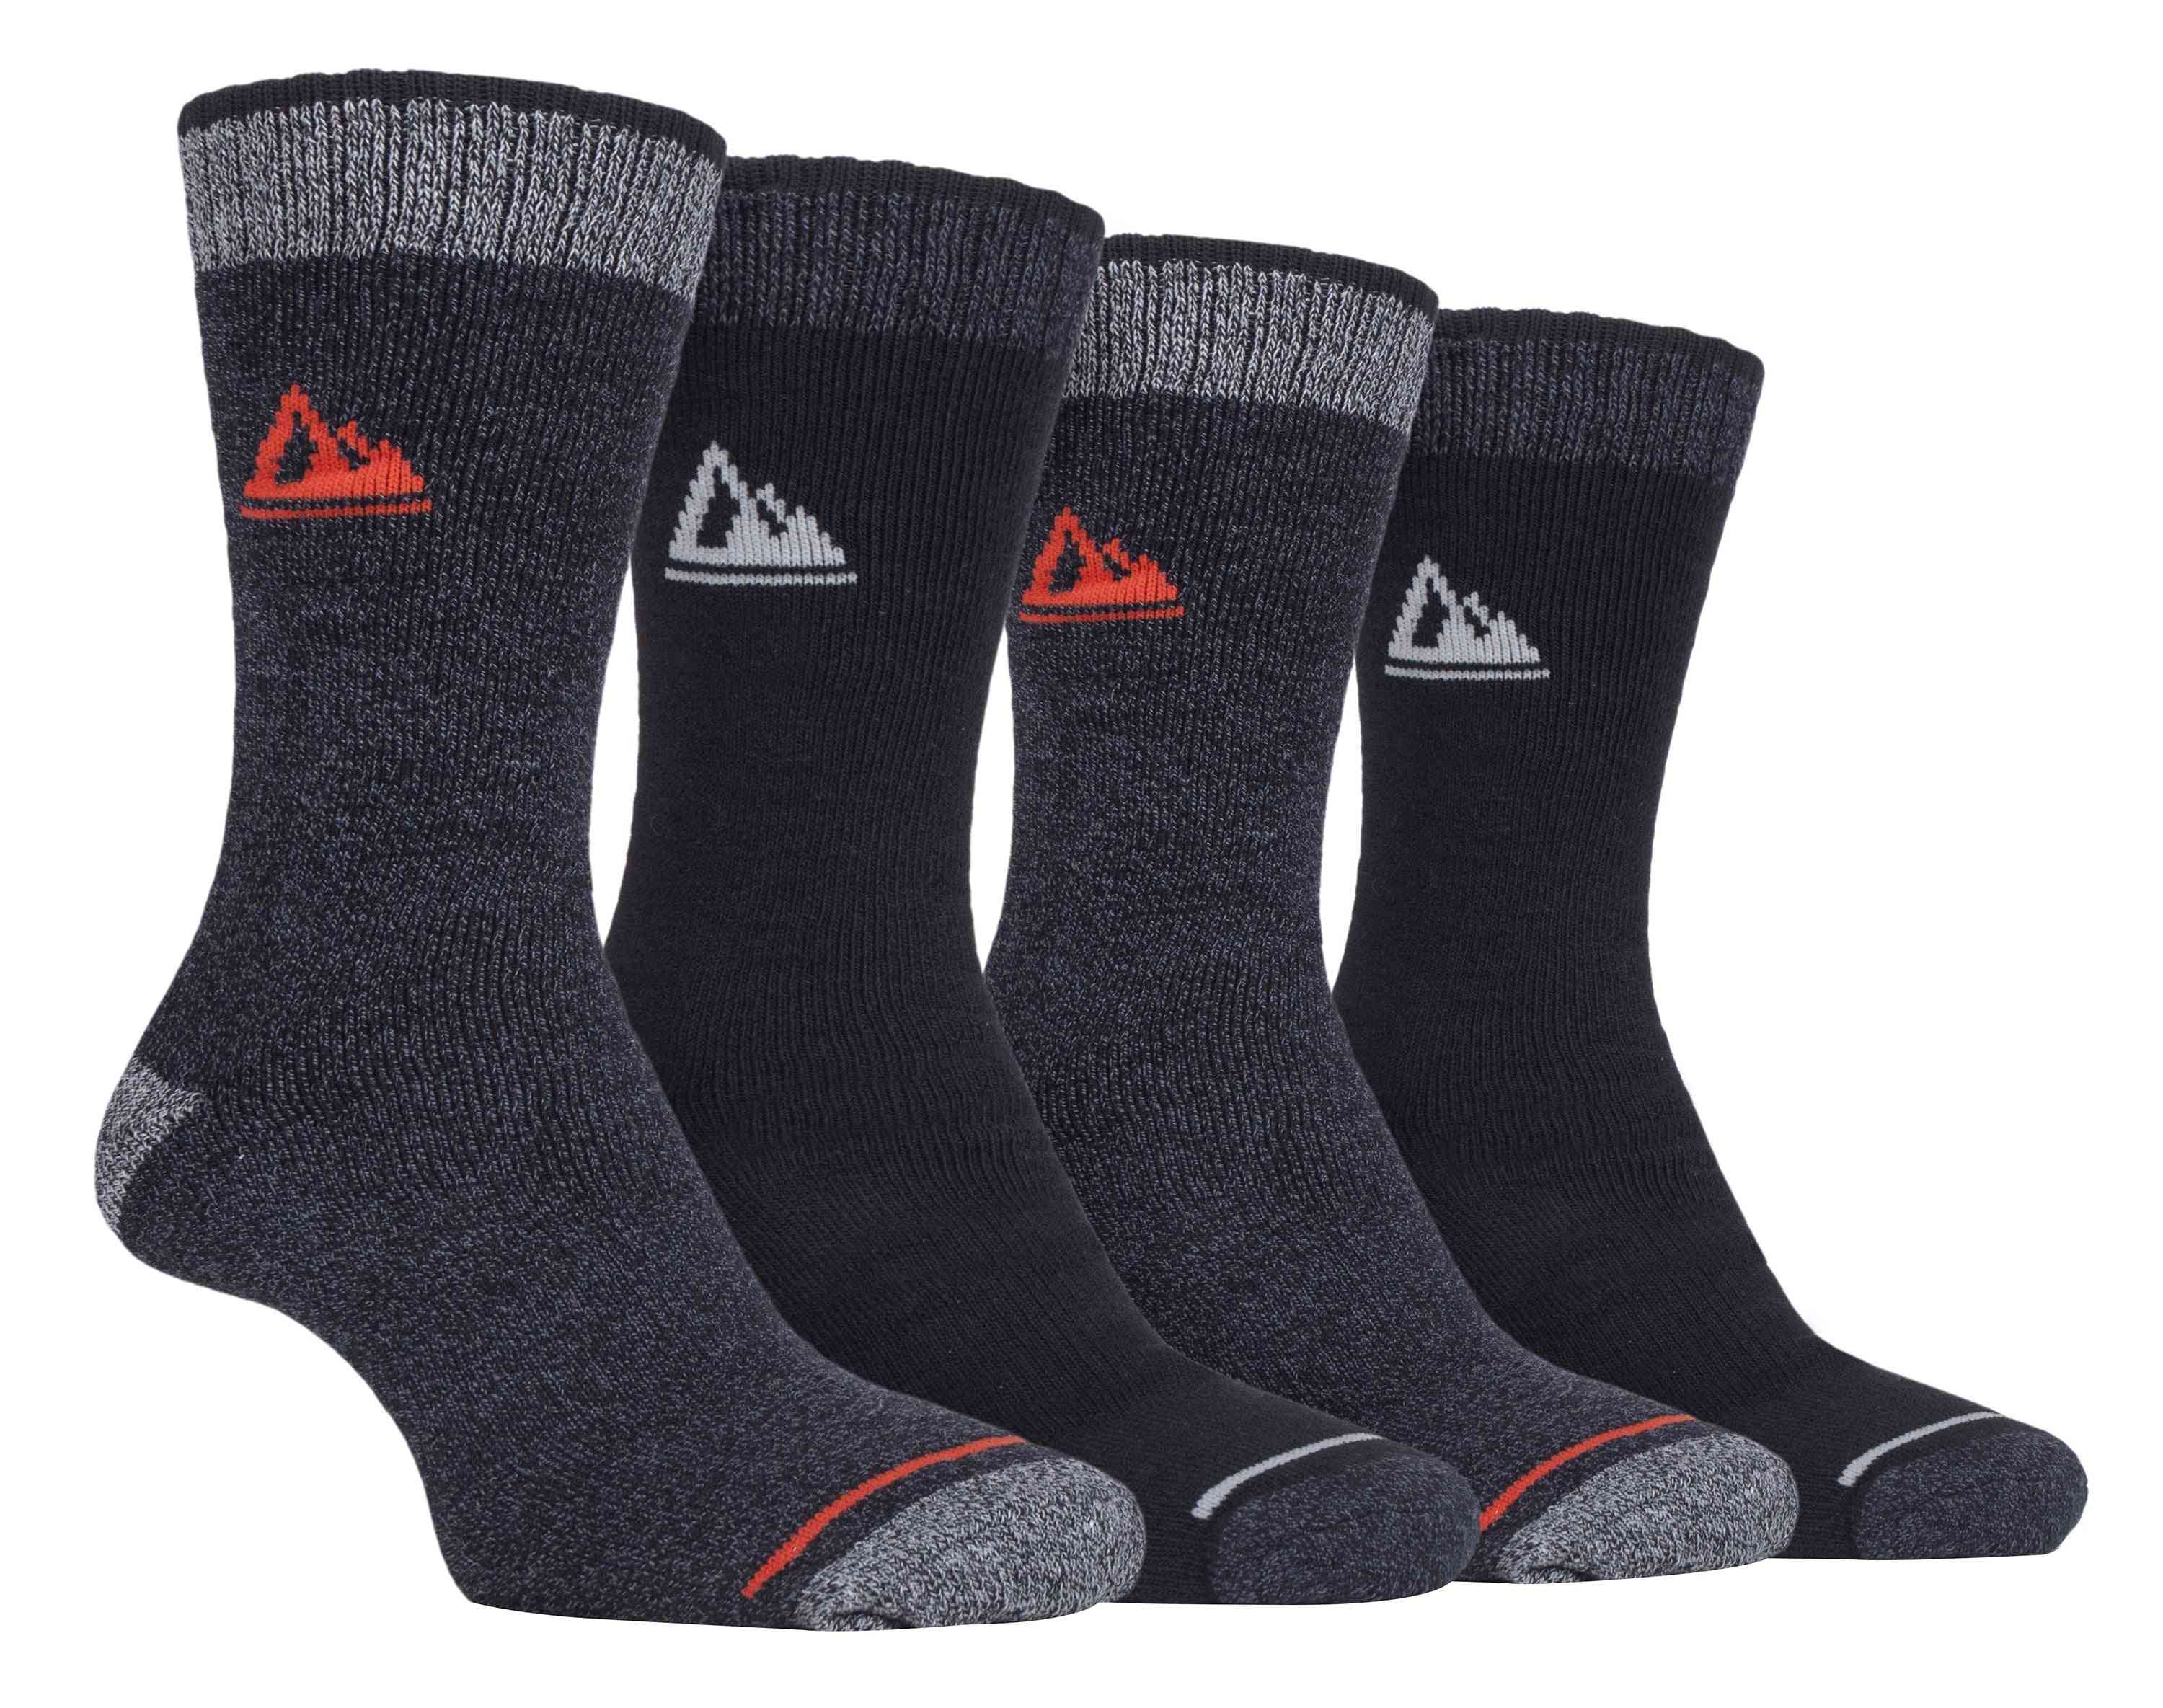 Men's Cushioned Hiking Socks